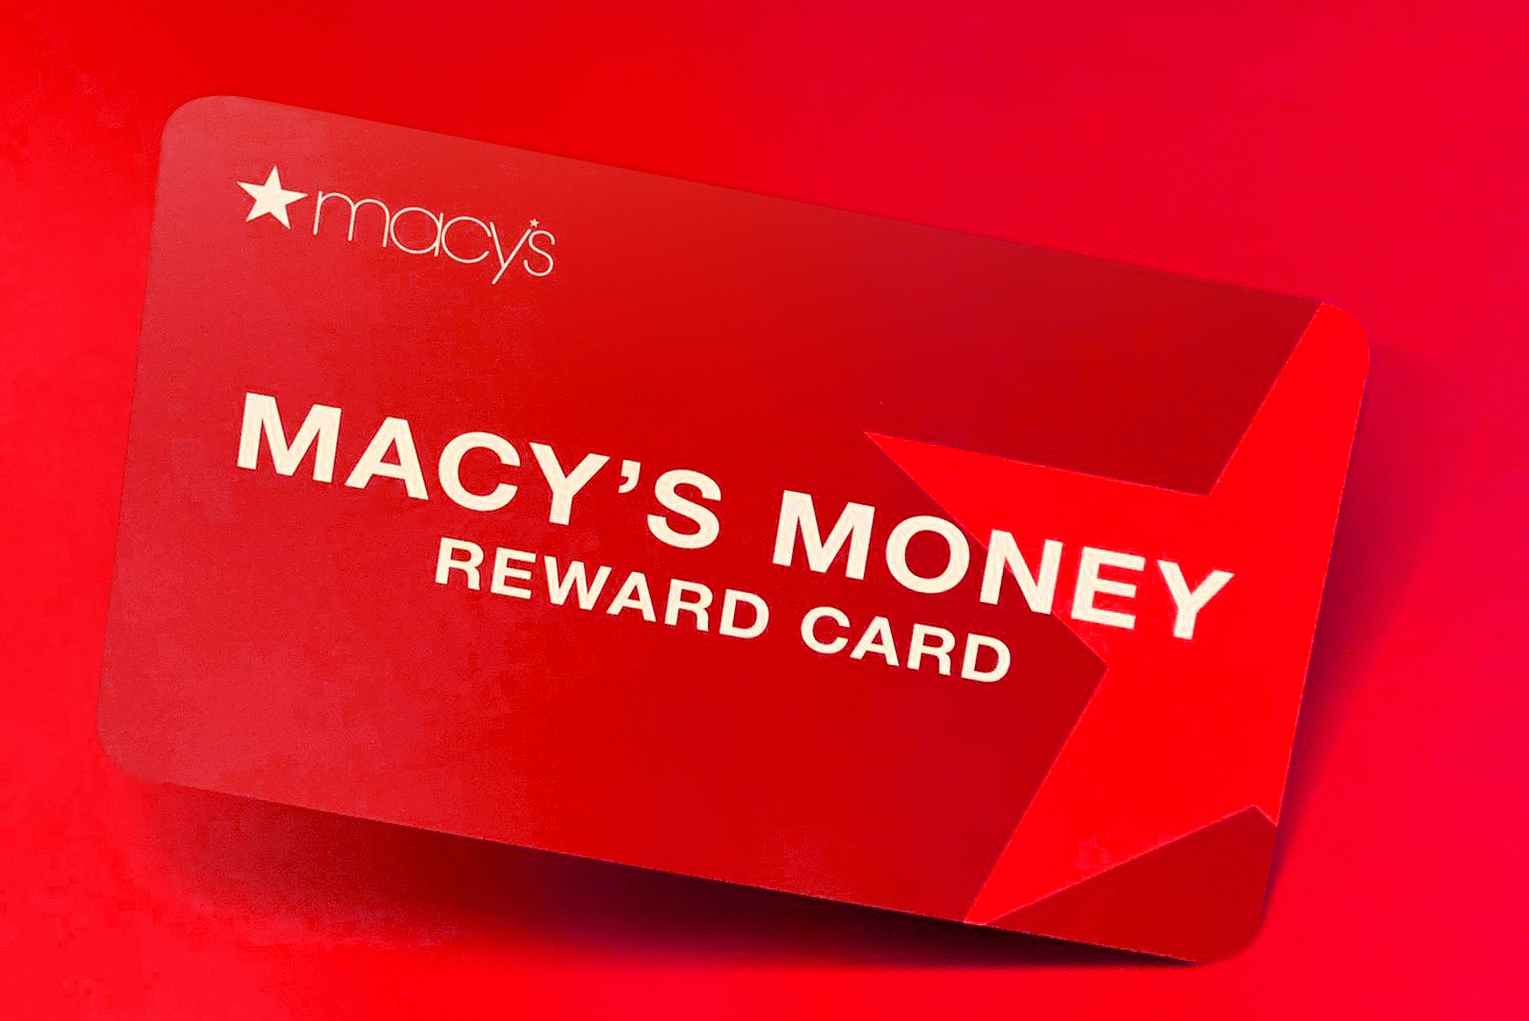 macys star rewards and macys money card